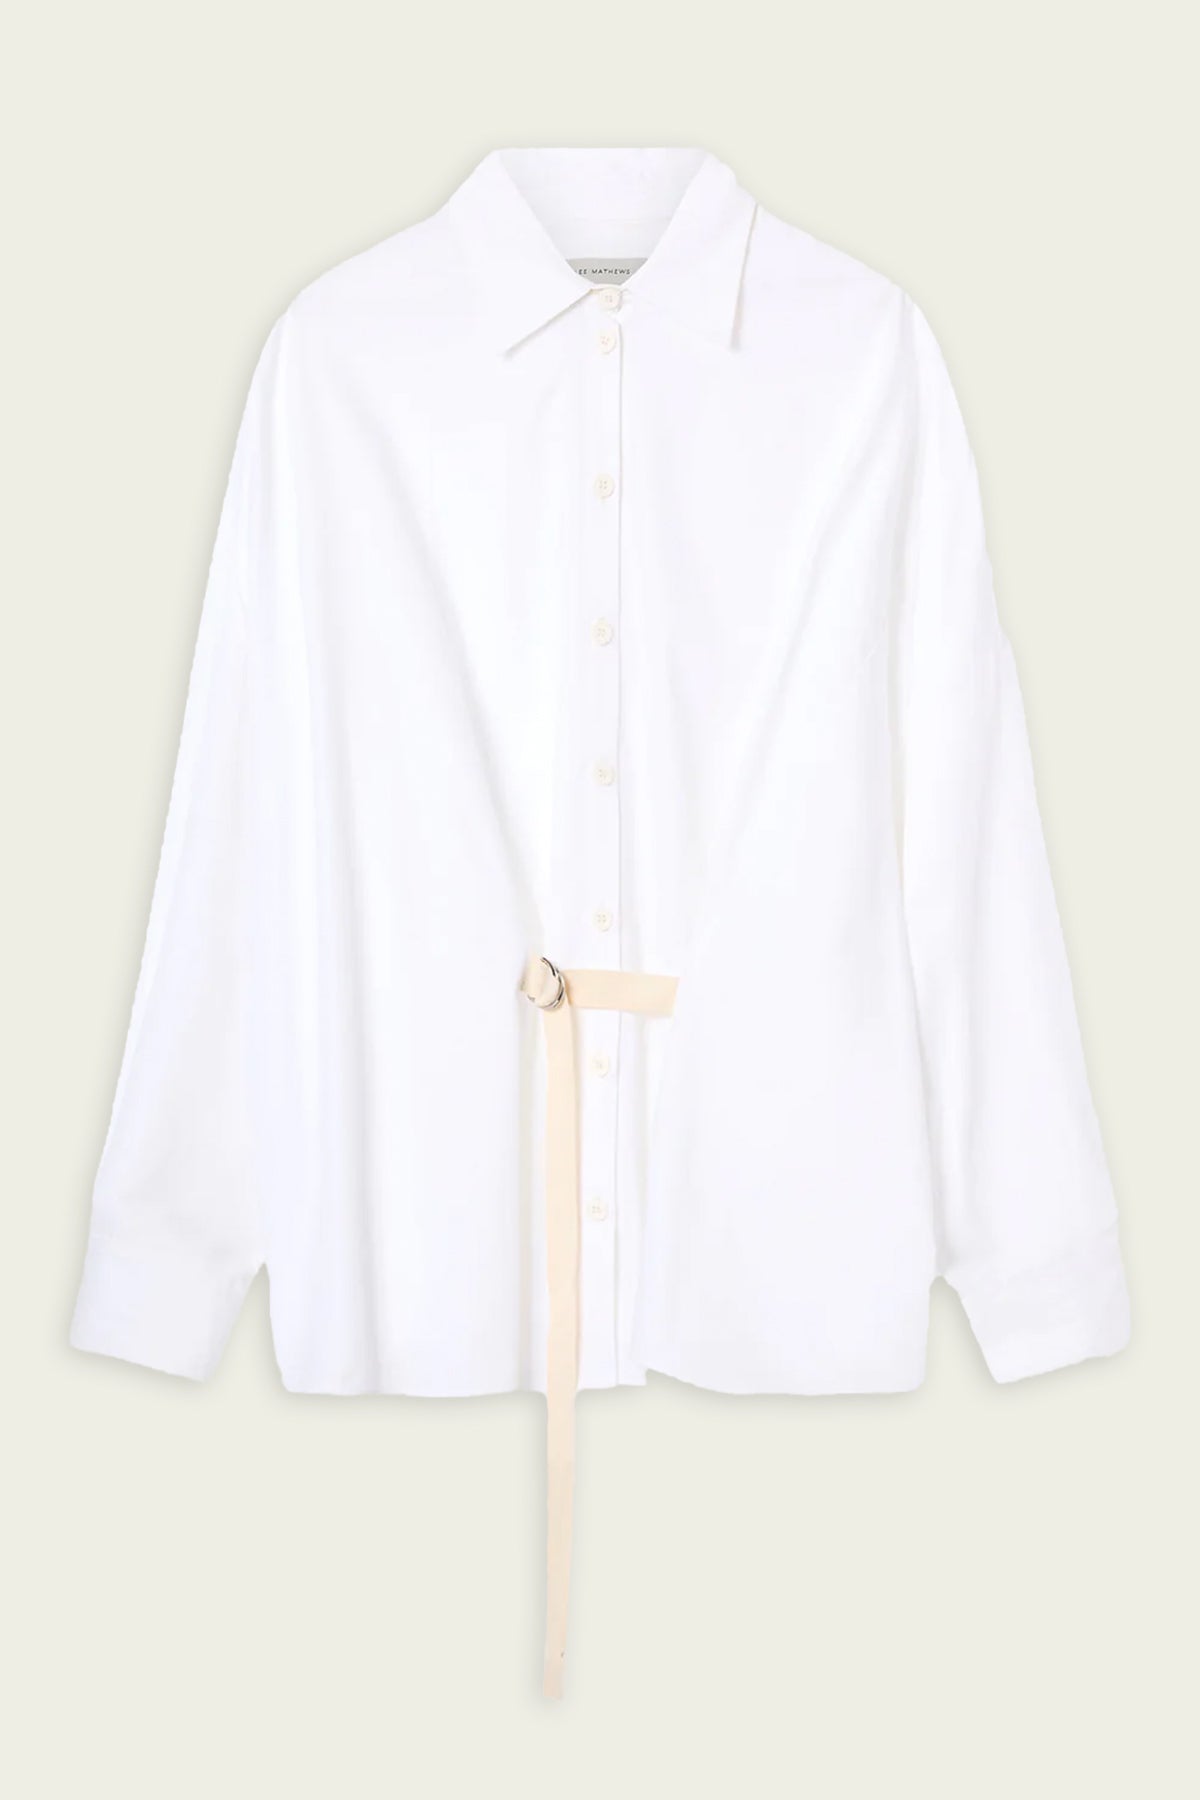 Tate Wrap Shirt in White - shop-olivia.com